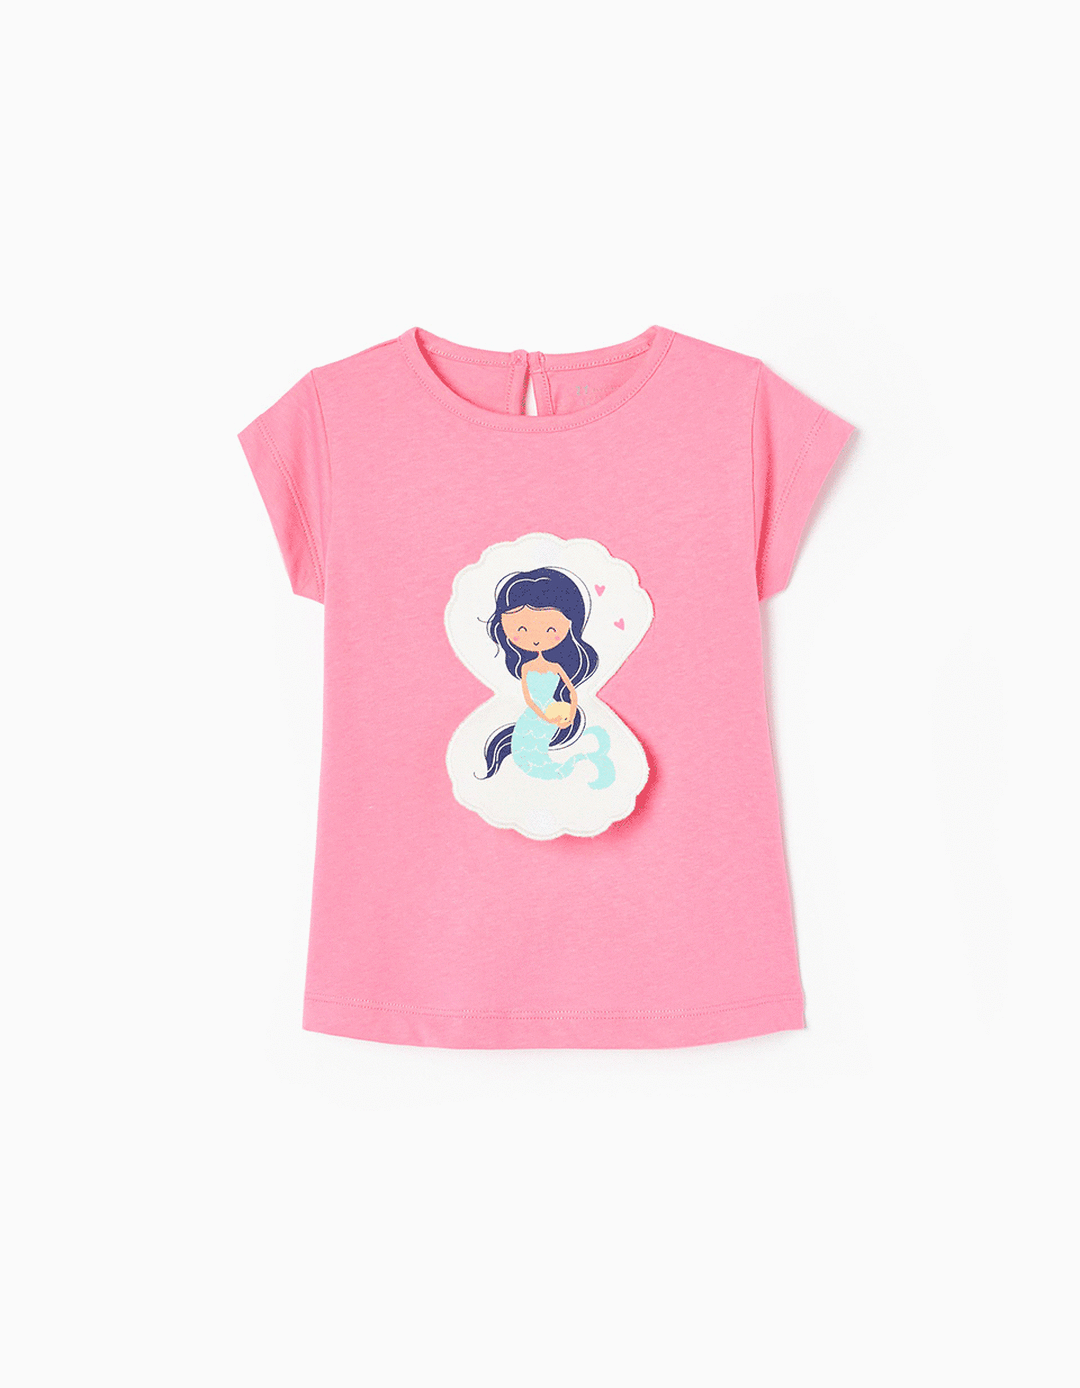 Cotton T-shirt for Baby Girls 'Mermaid', Pink